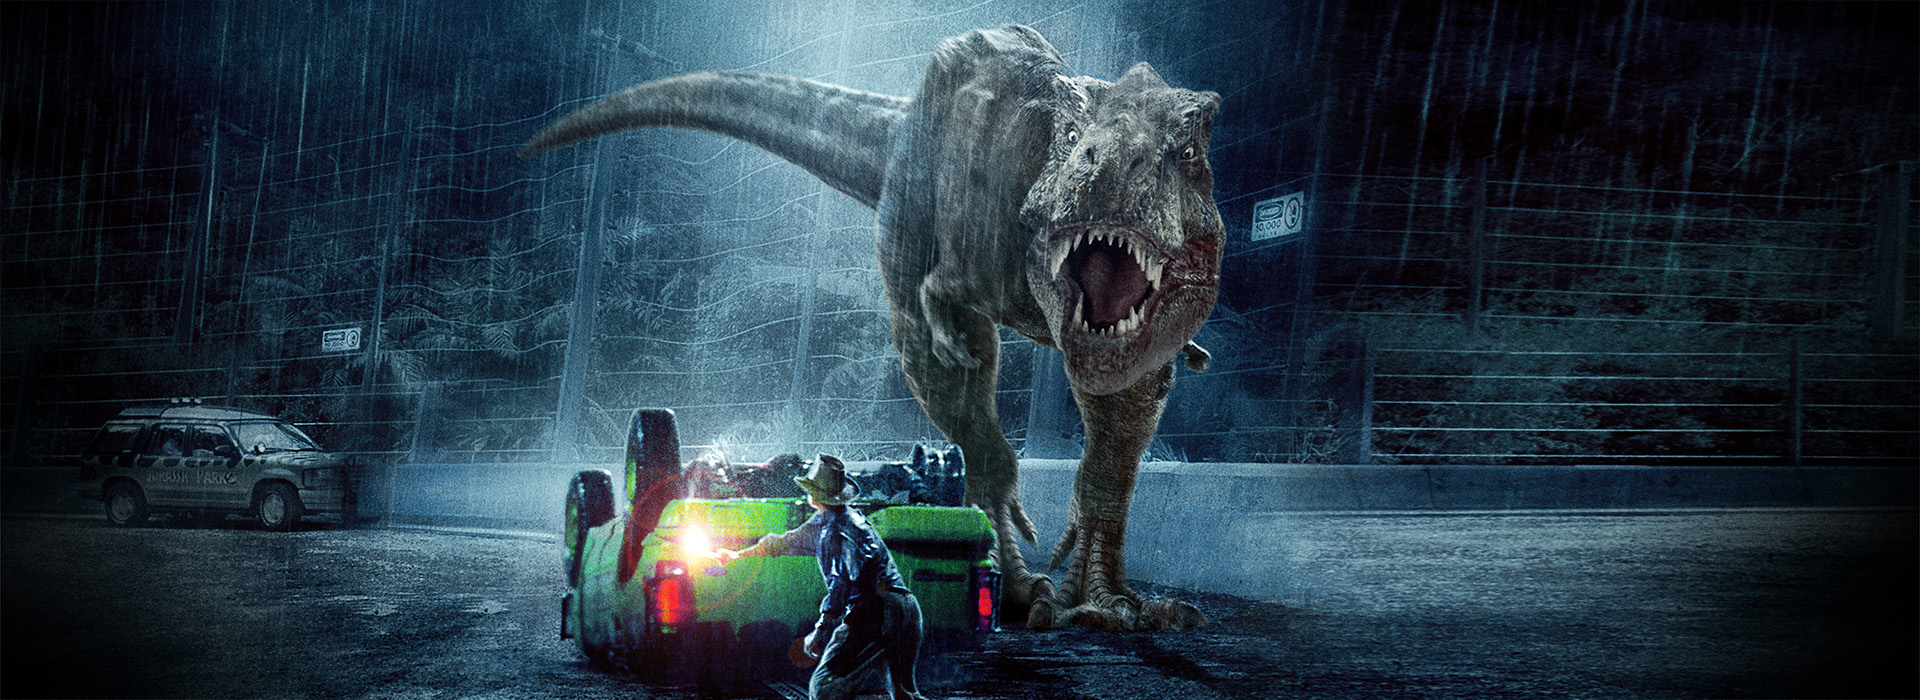 Movie poster Jurassic Park